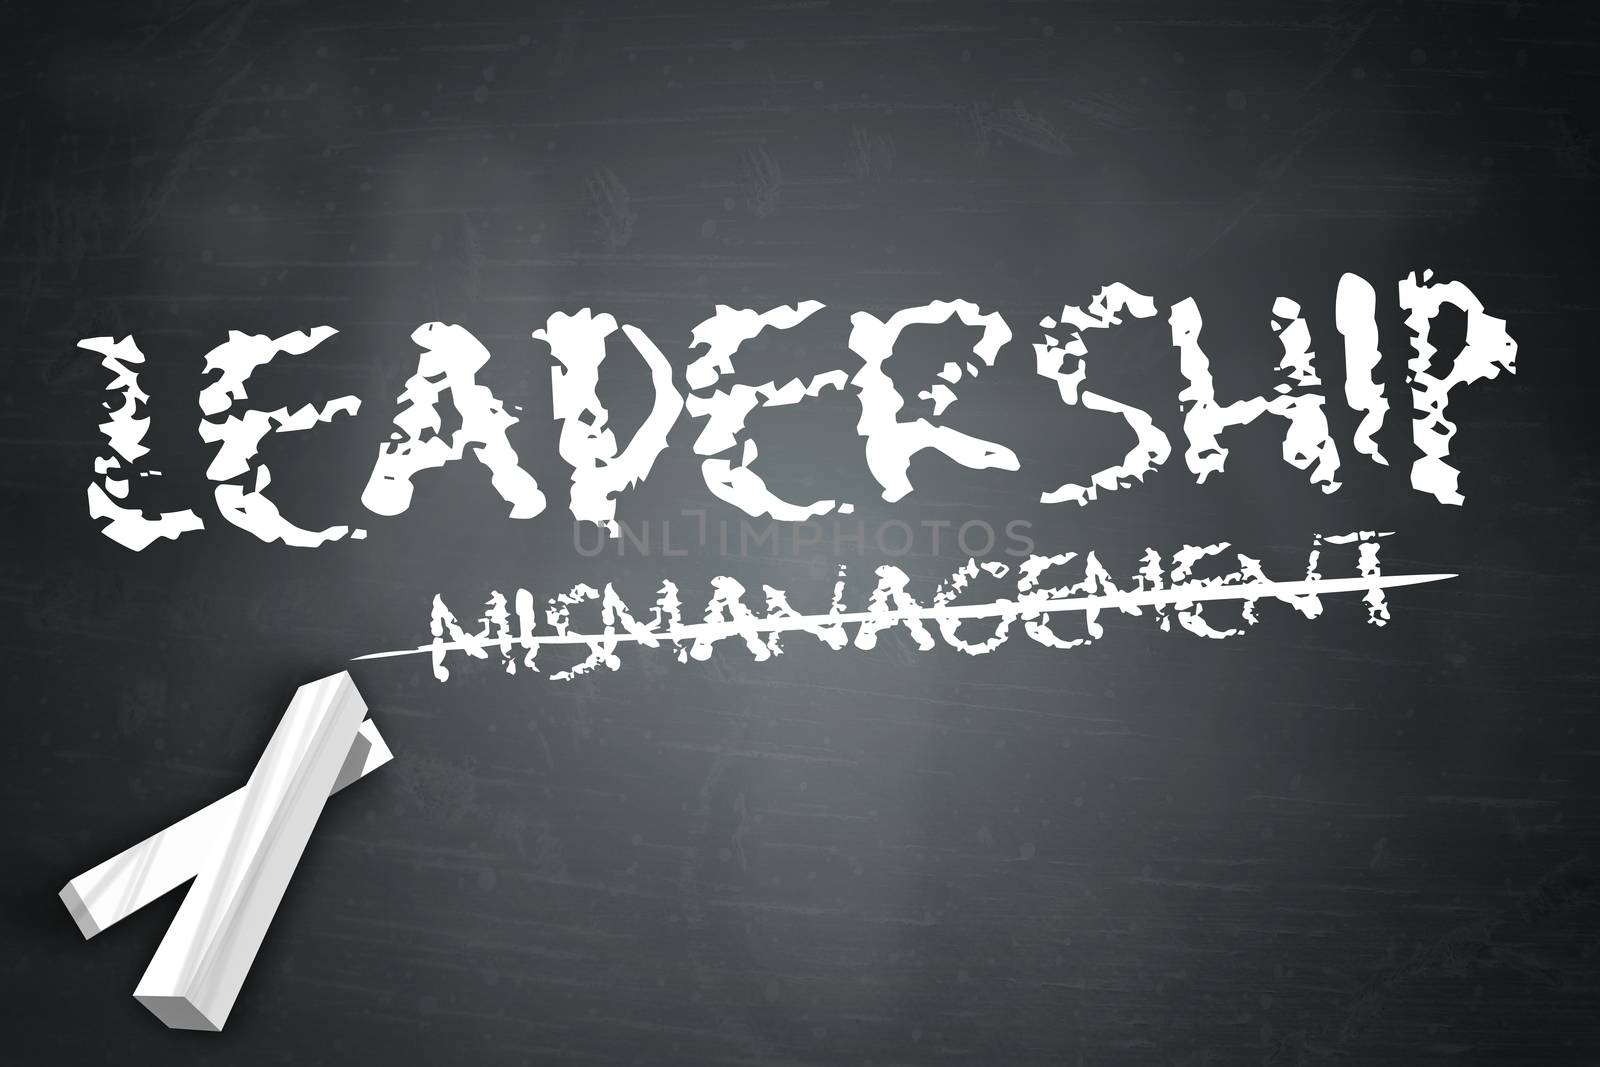 Blackboard "Leadership"